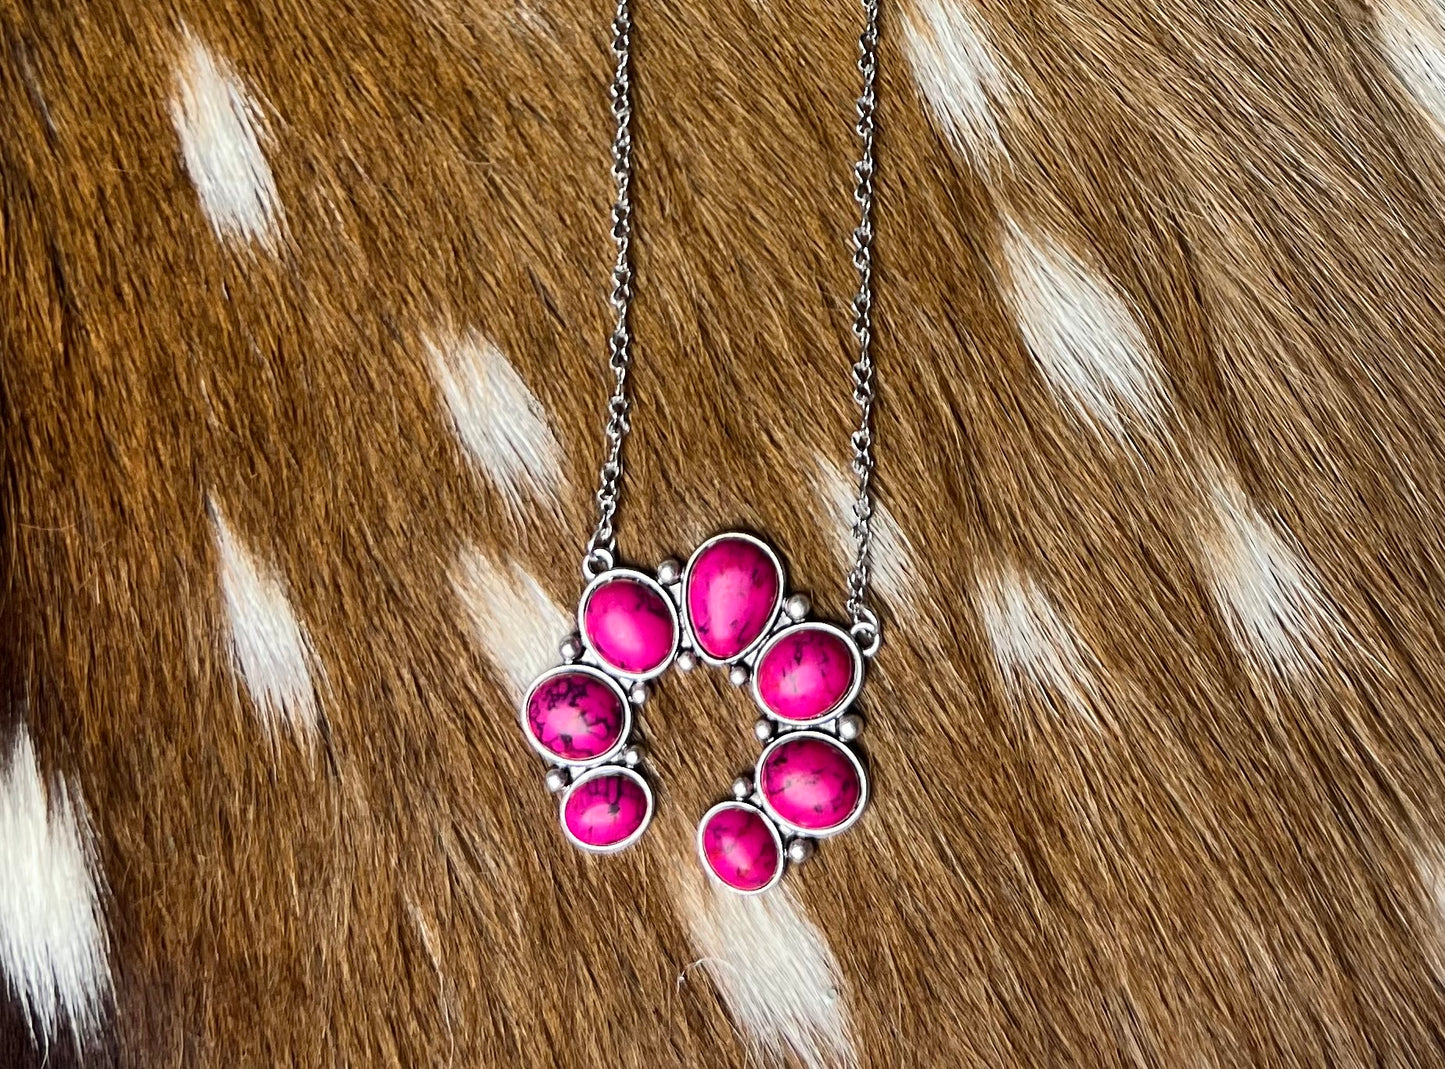 Pink Rowena Squash Blossom Necklace